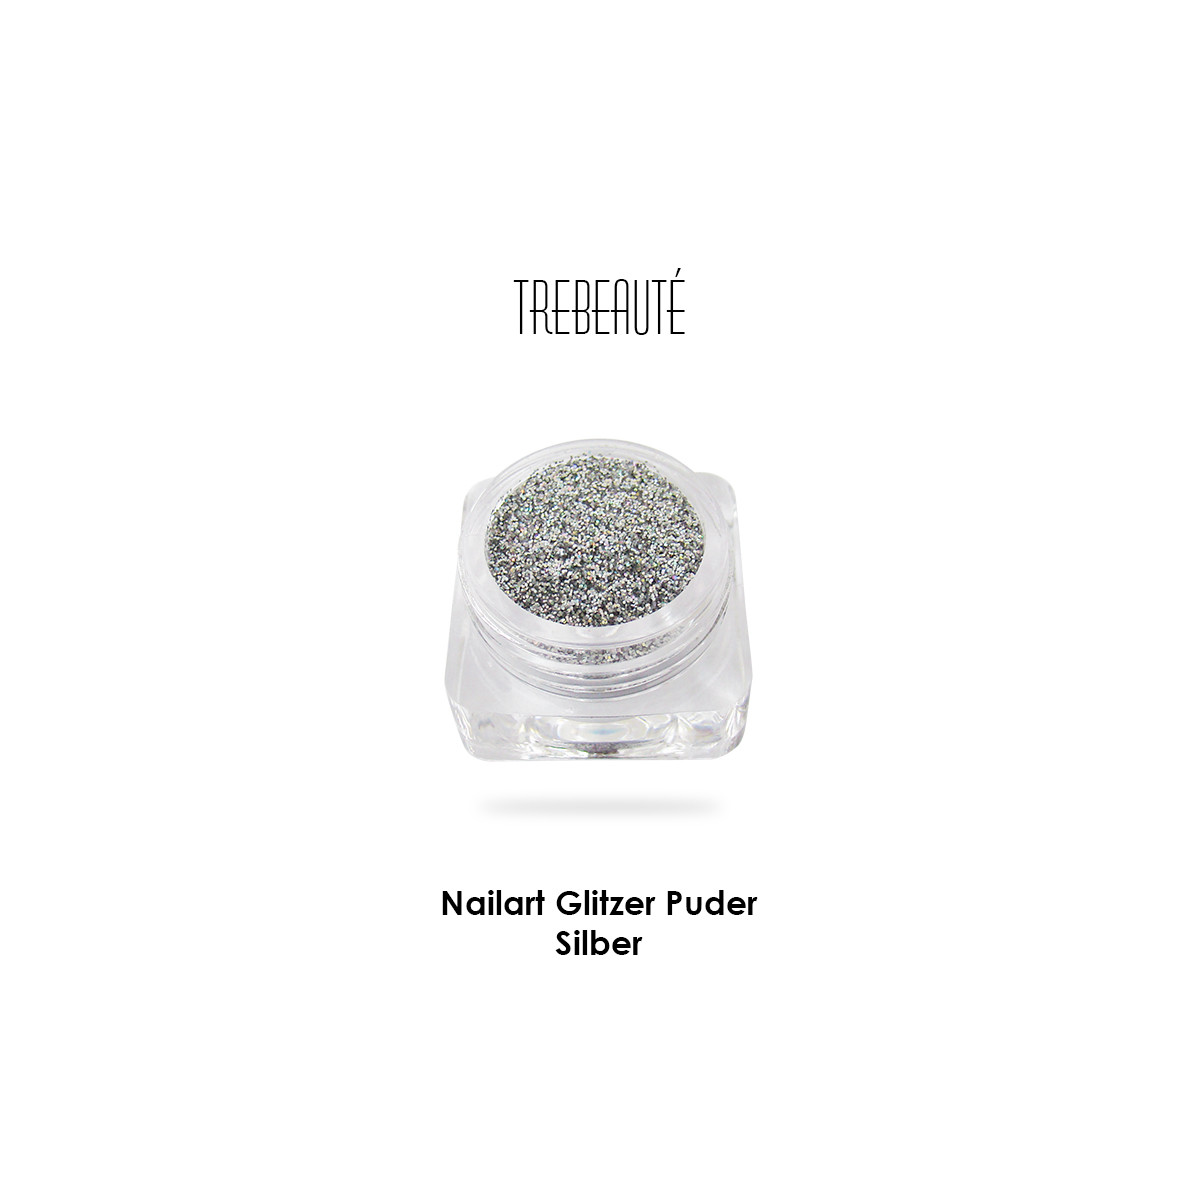 Nailart Glitzer Puder & Glitterstaub, Silber